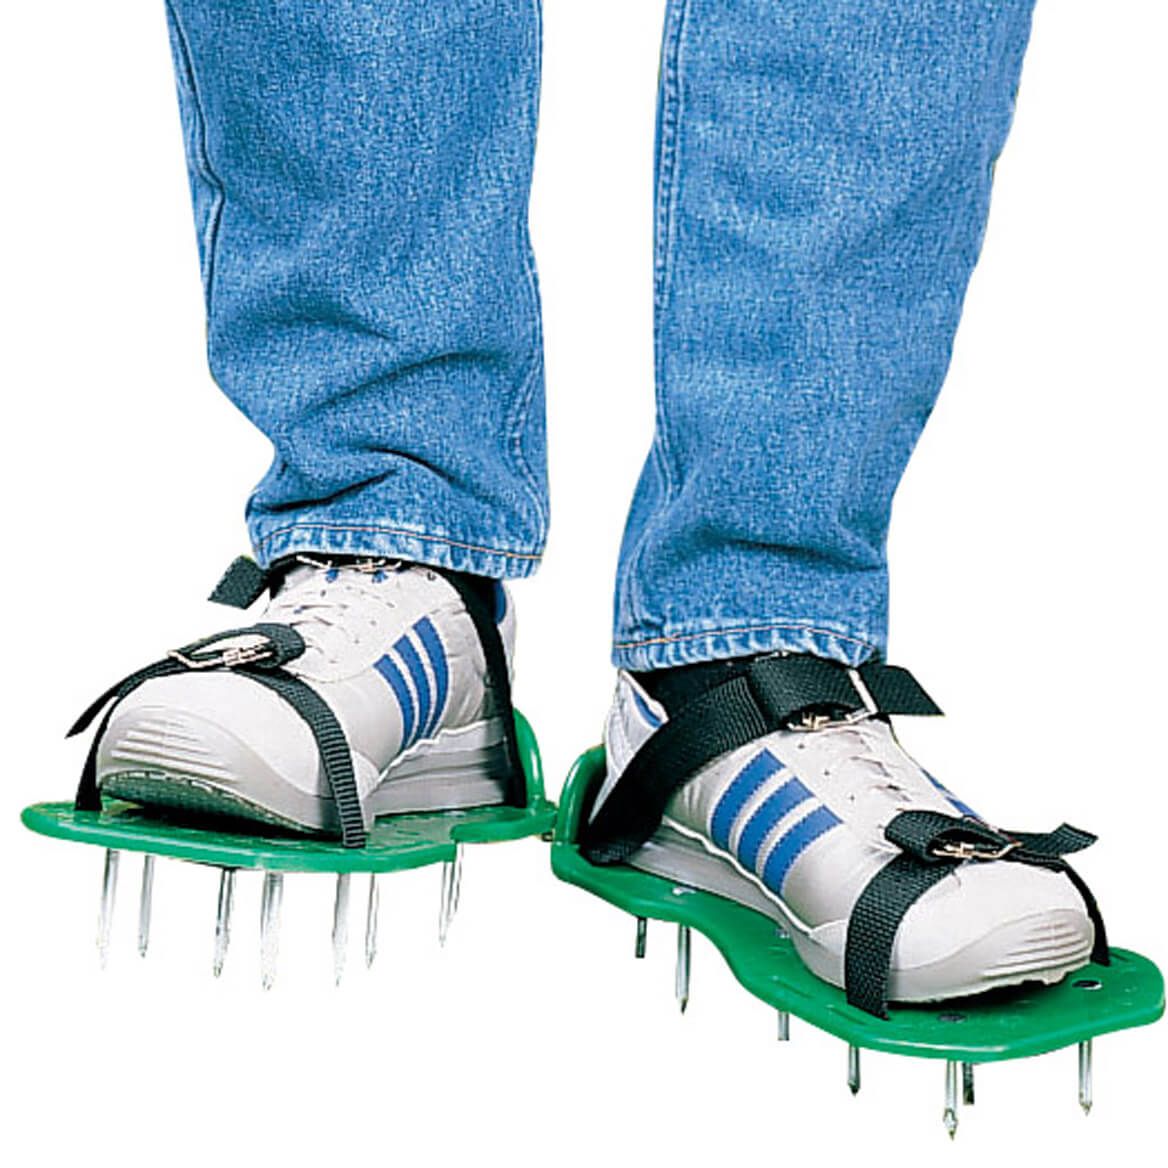 Lawn Aerator Sandals + '-' + 310608